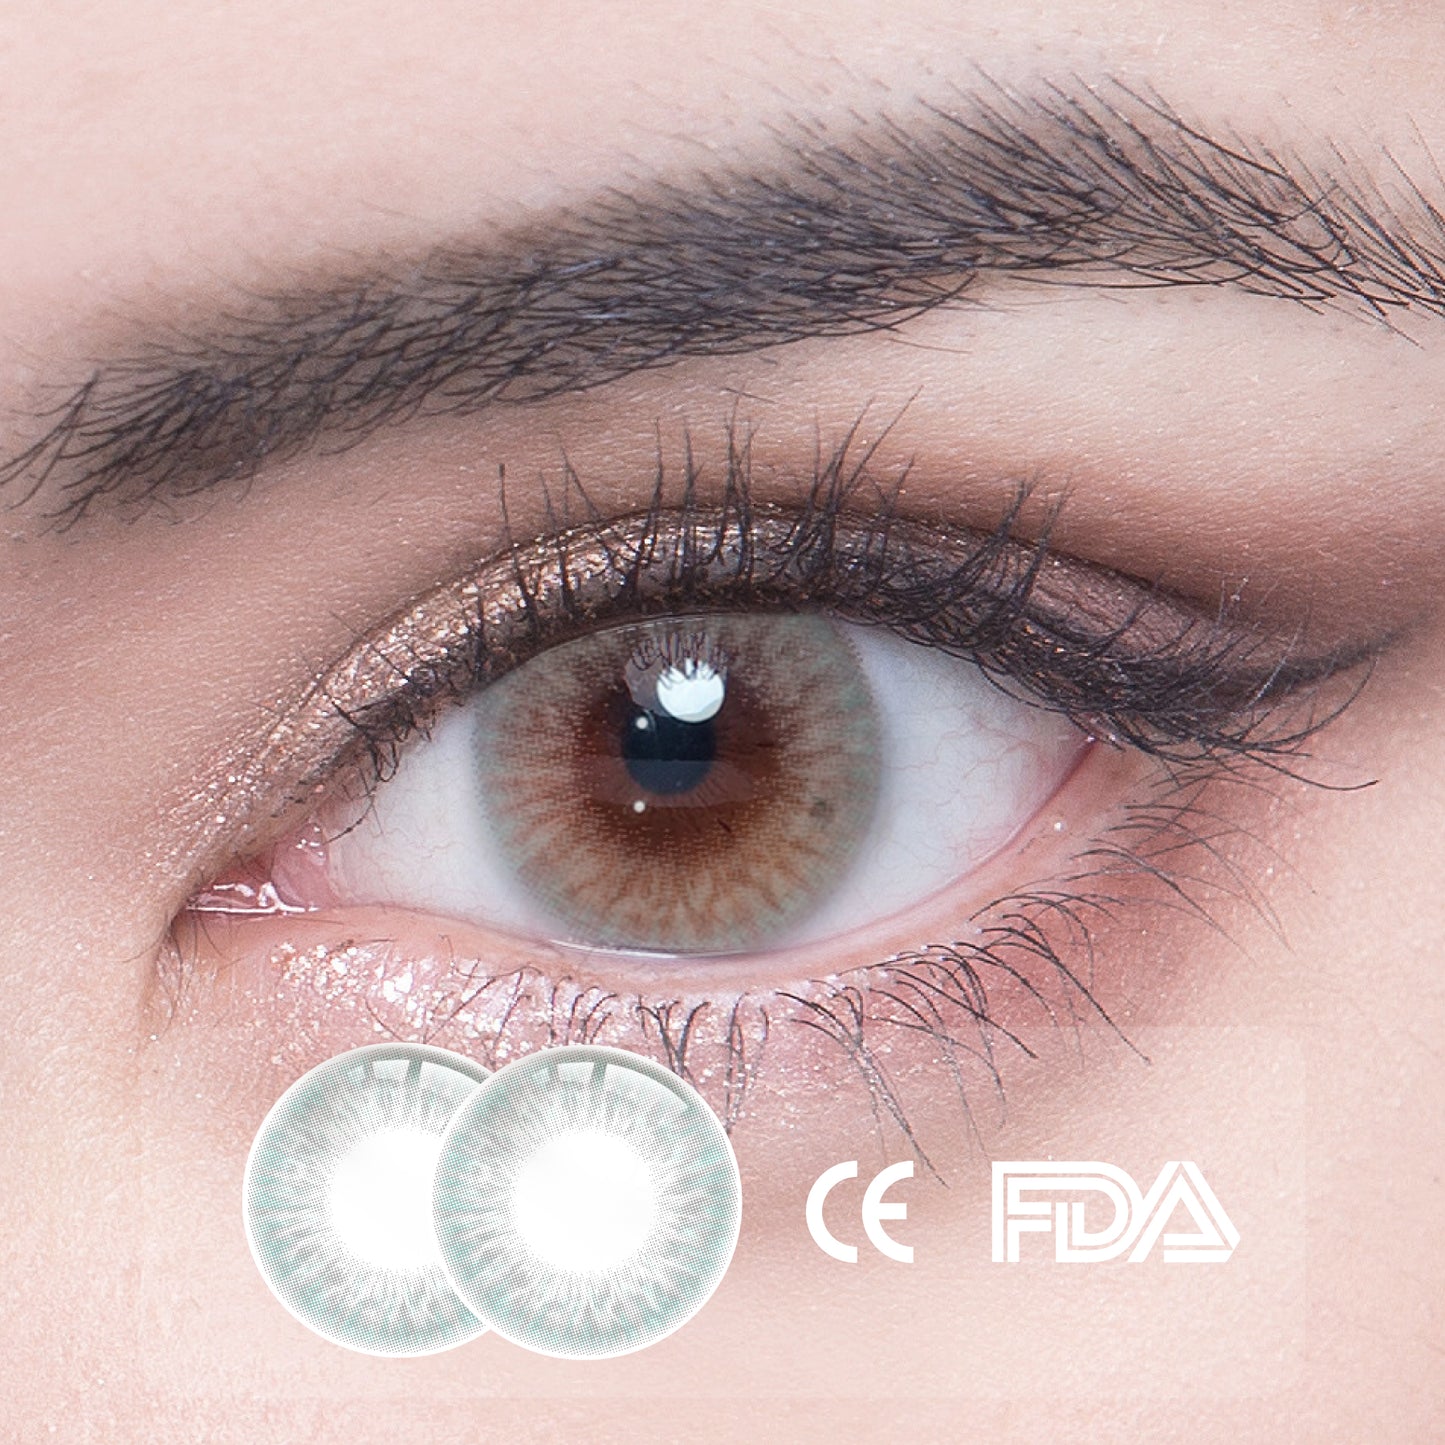 1Pcs FDA Certificate Eyes Colorful Contact Lenses - Lolita light grey